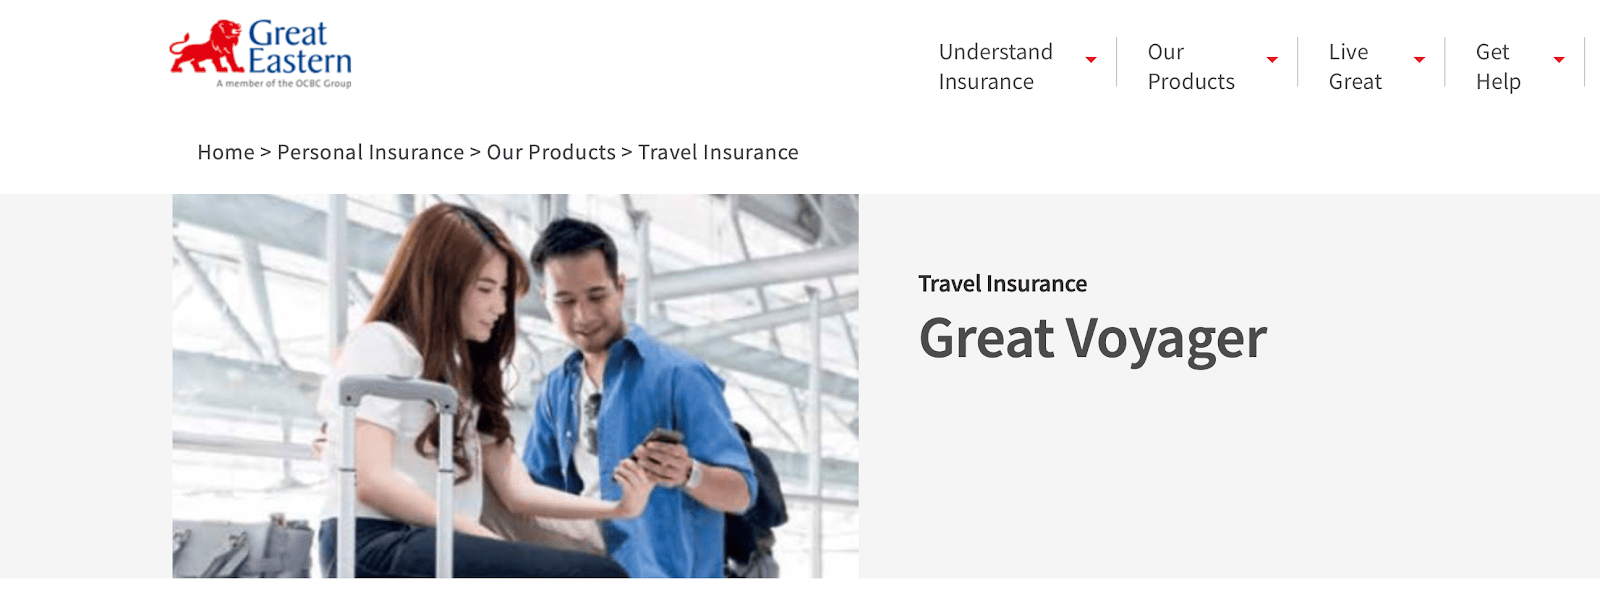 great eastern travel insurance emergency number